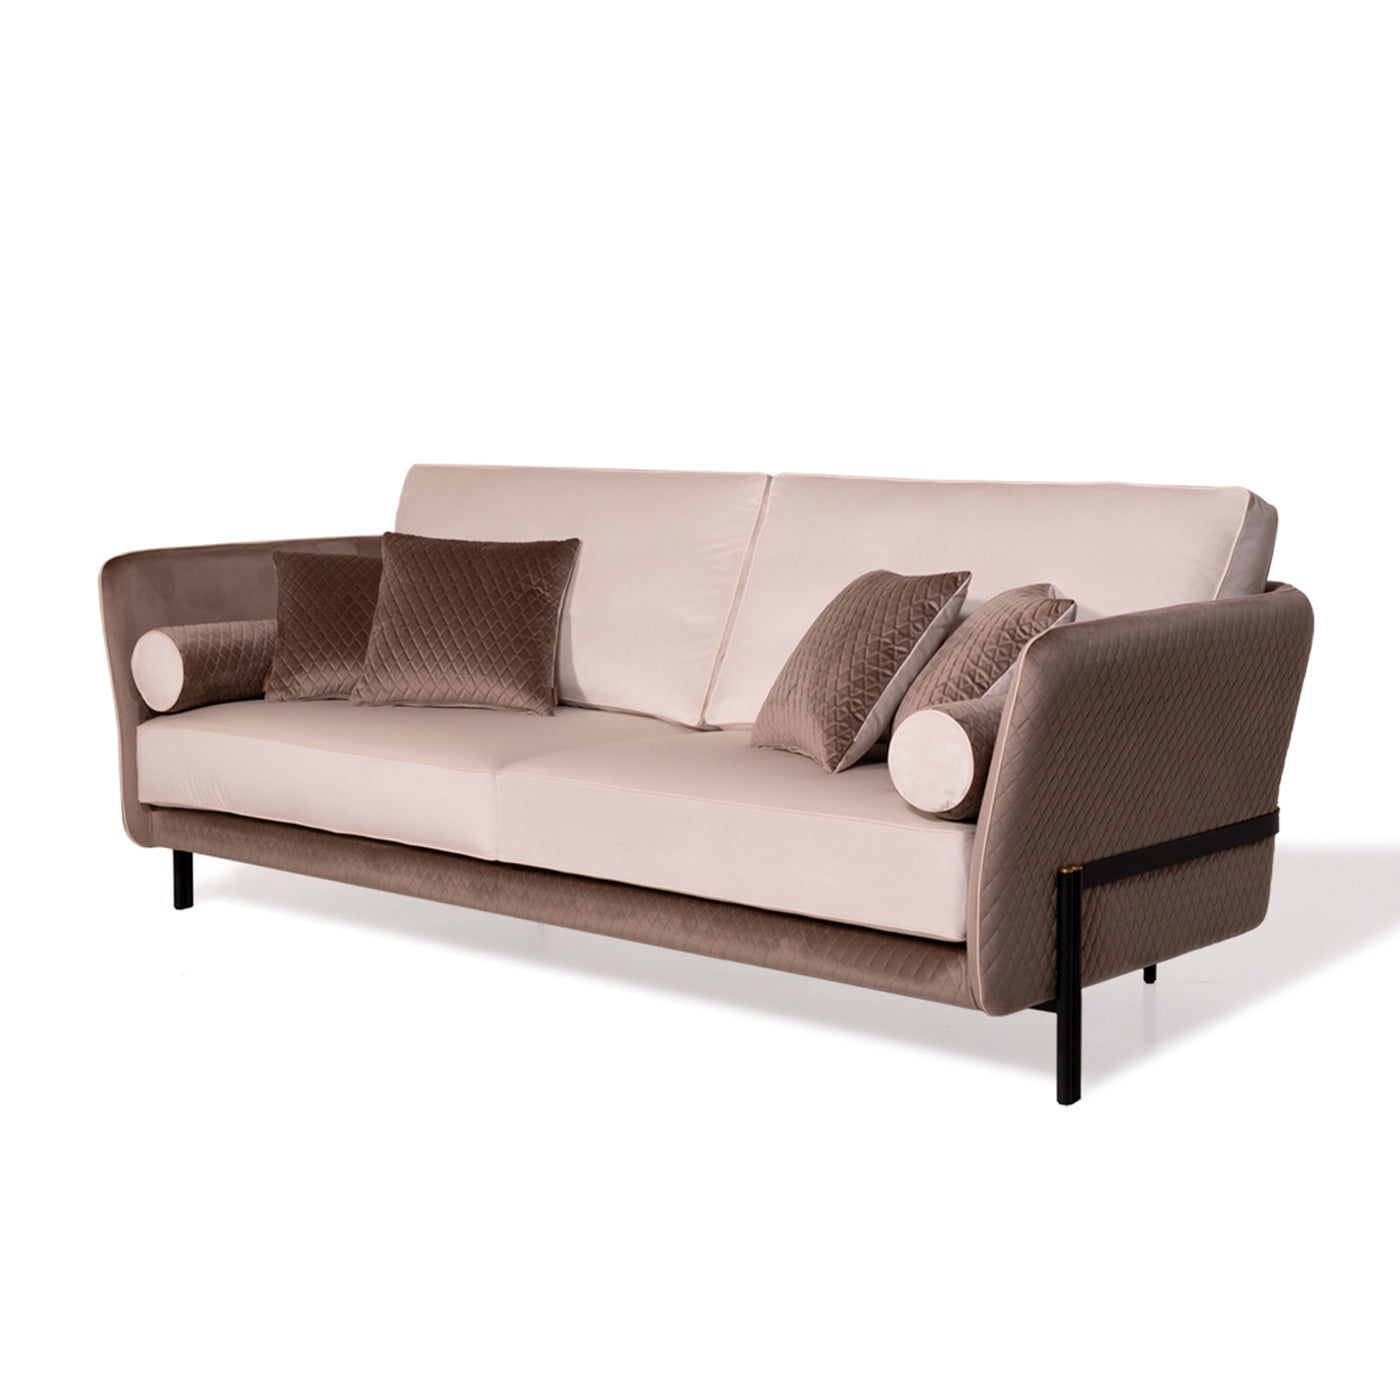 Universal Sofa by Marco and Giulio Mantellassi  - Alternative view 1